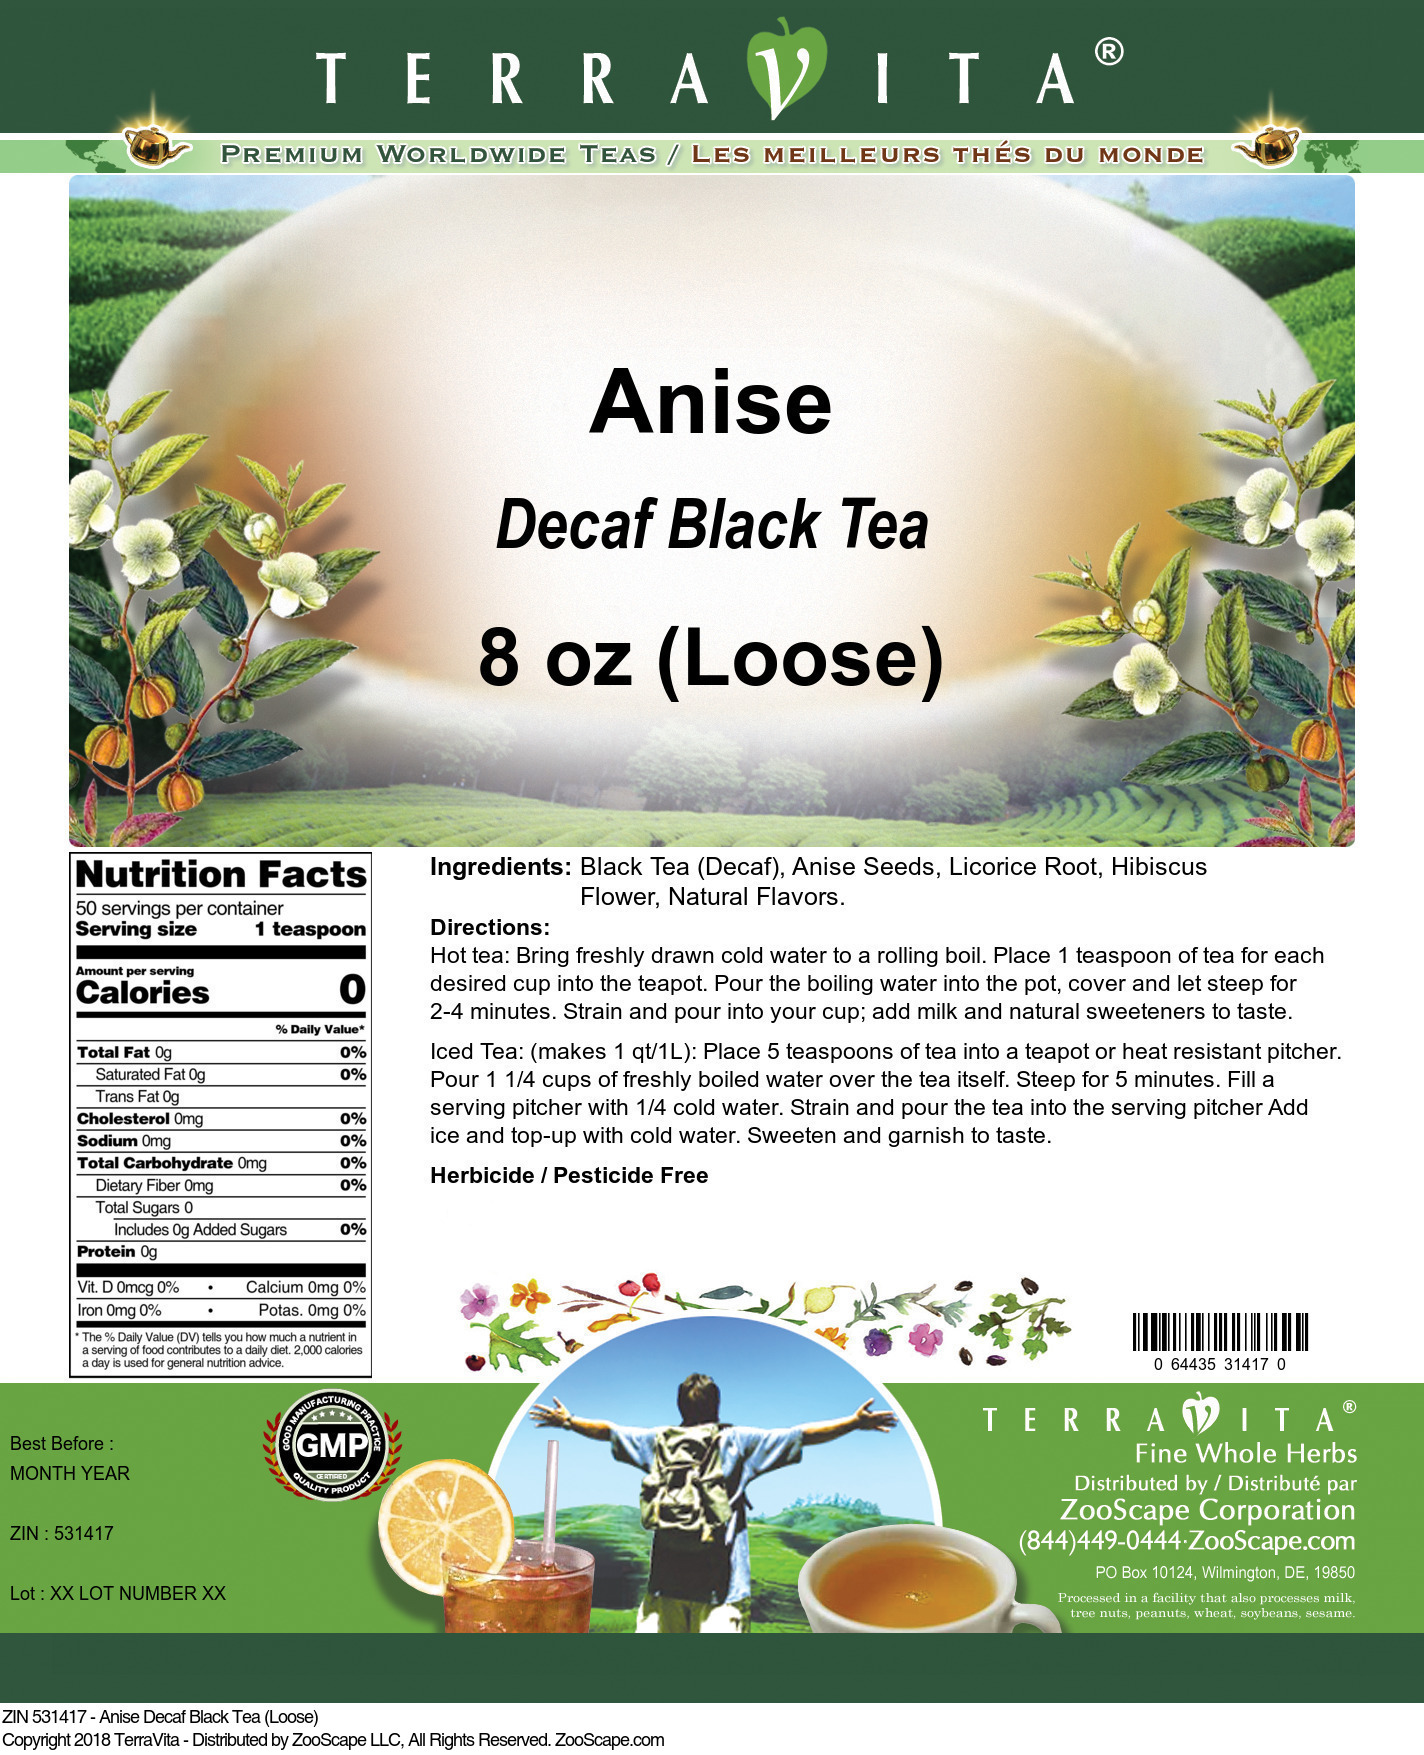 Anise Decaf Black Tea (Loose) - Label